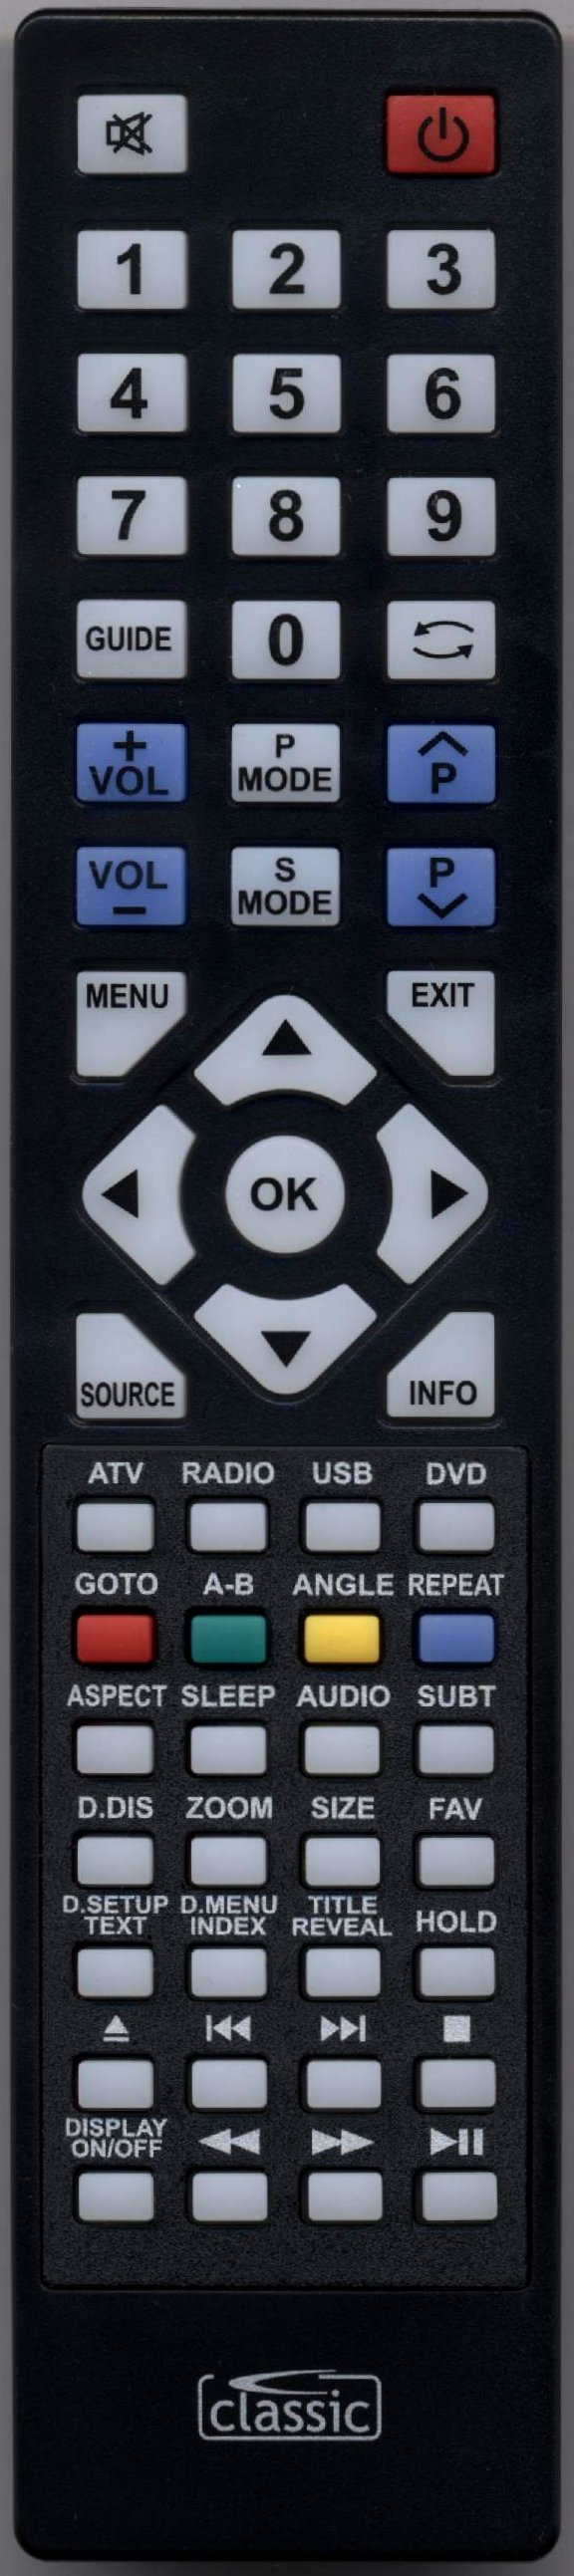 UMC - X26/28G Alternative Remote Control